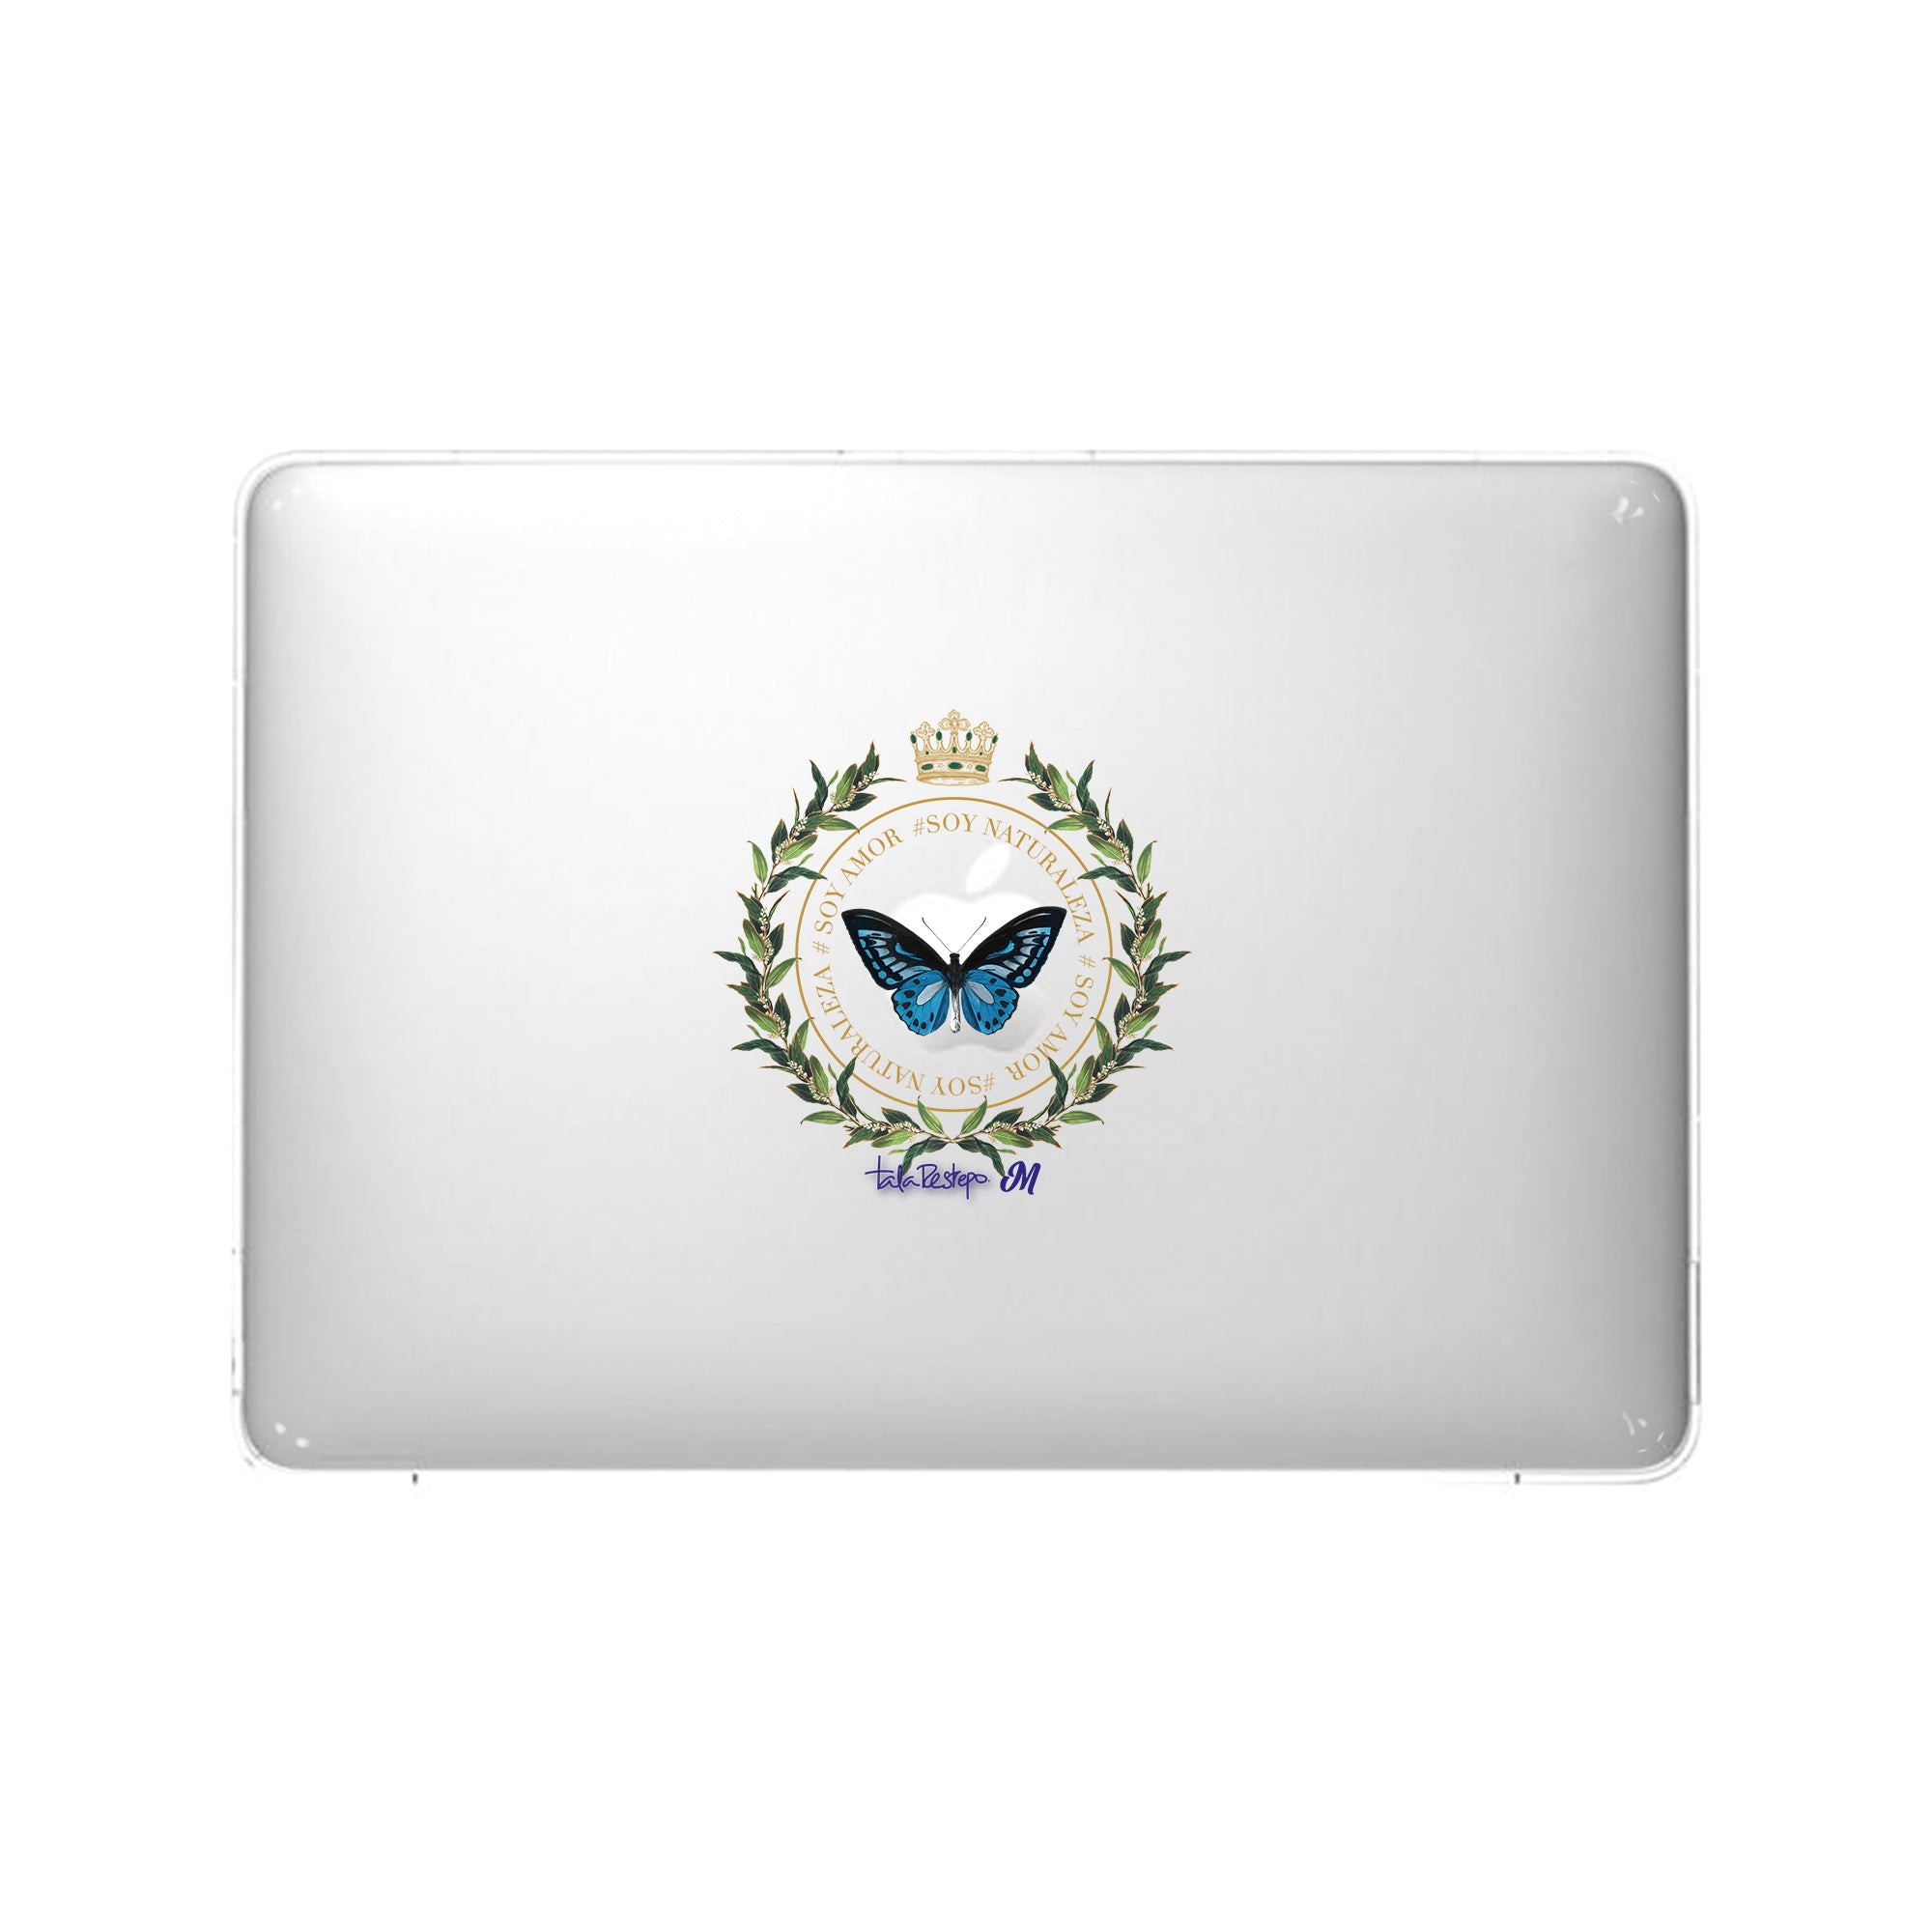 Mariposa MacBook Case - Mandala Cases